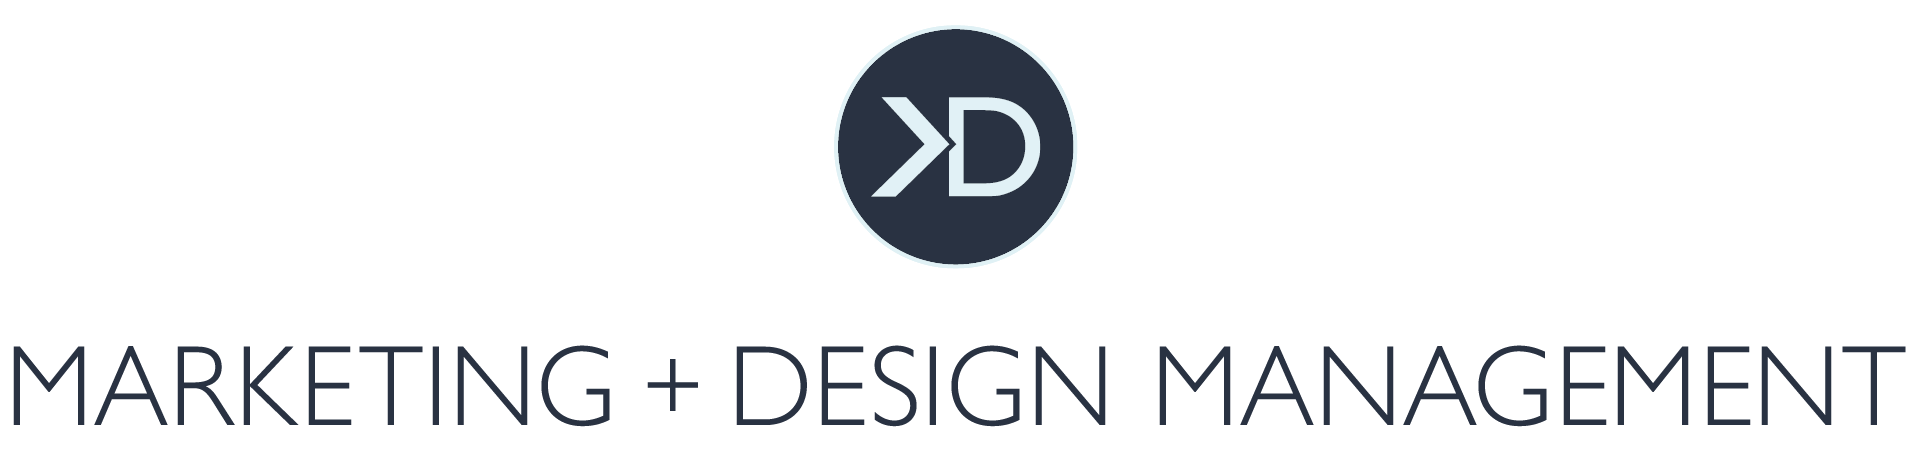 Marketing + Design Management Katrin Drewes